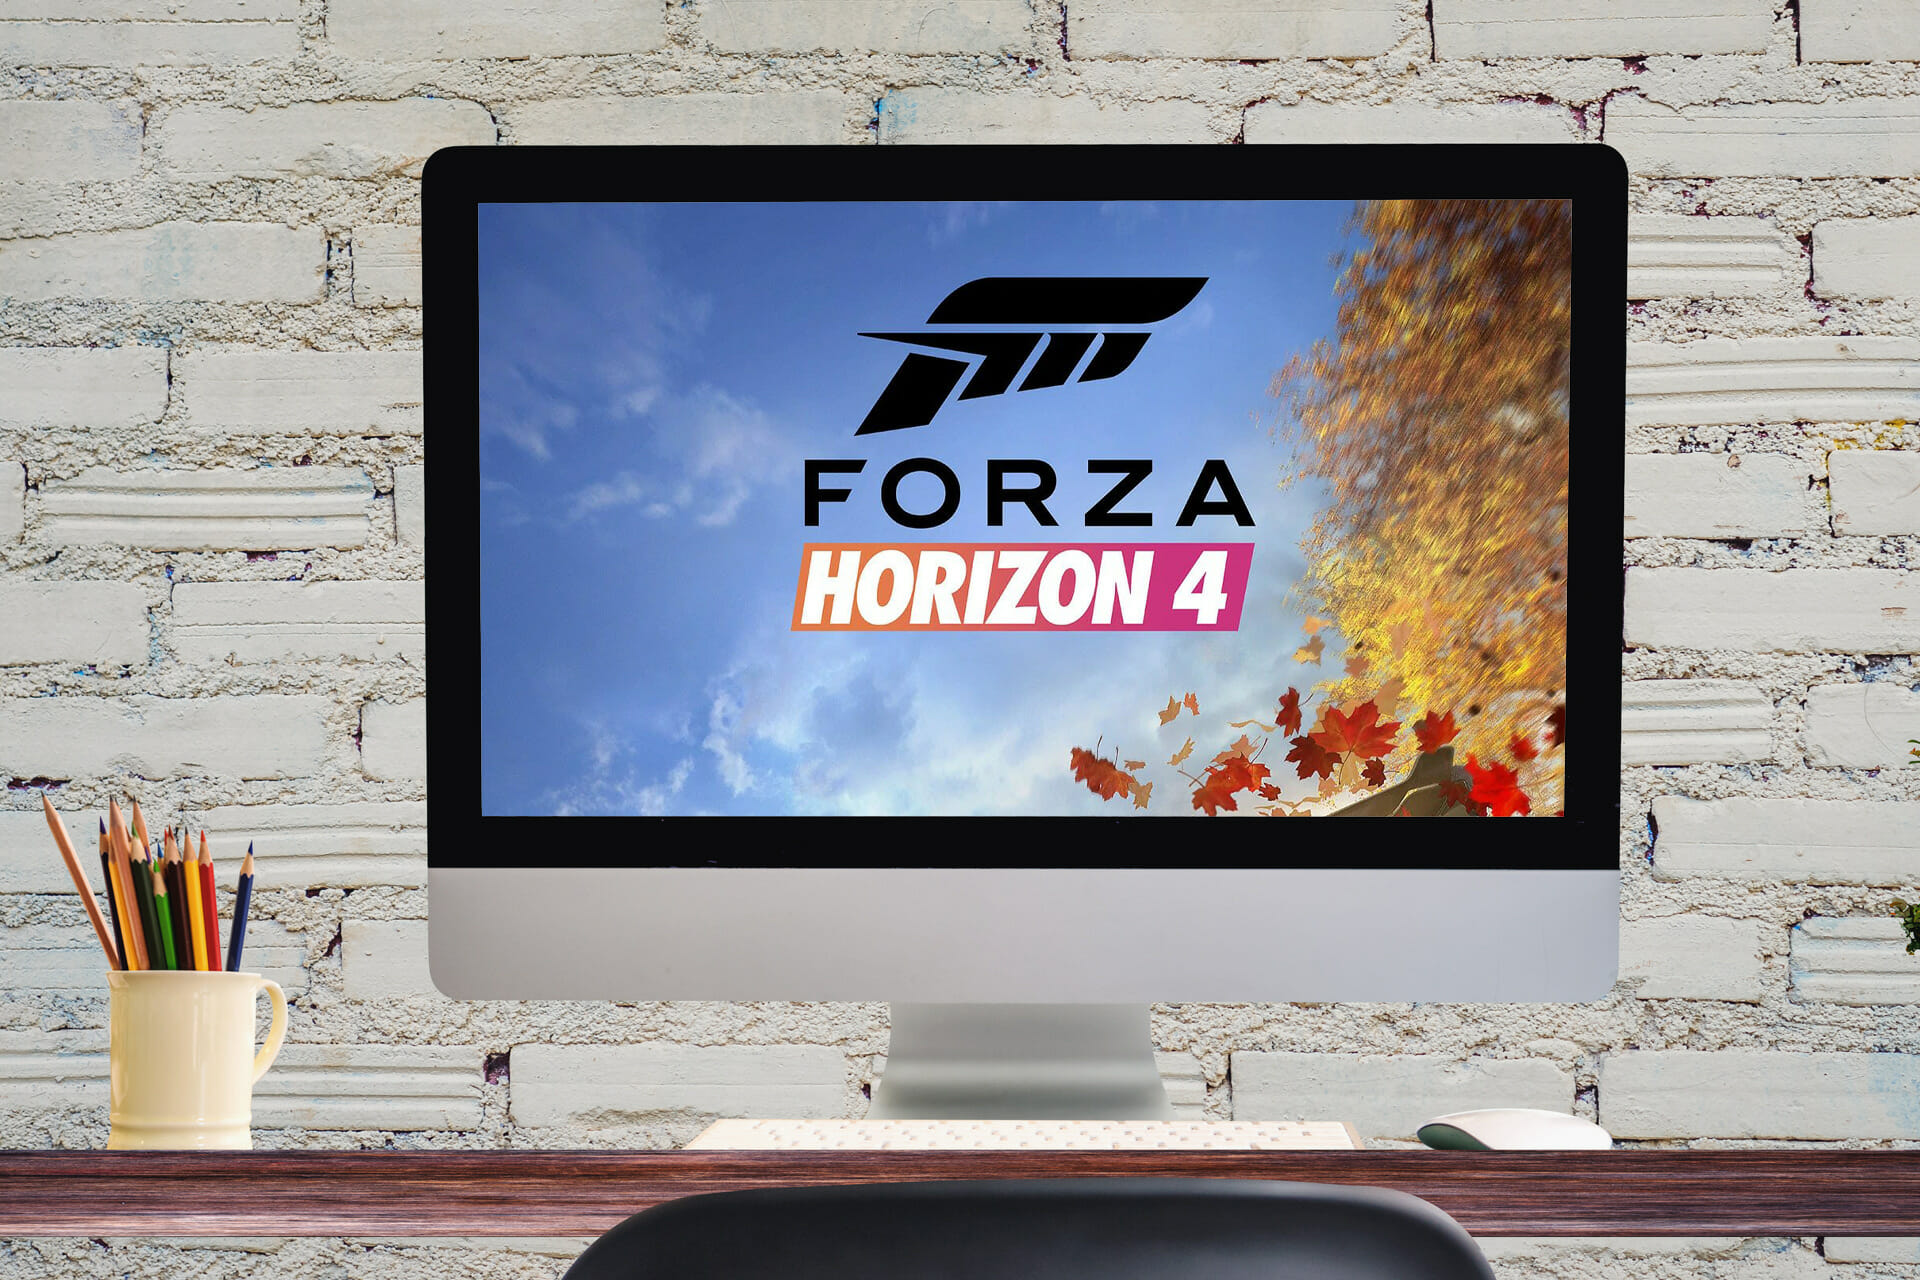 Forza Horizon 4 rewind is not working